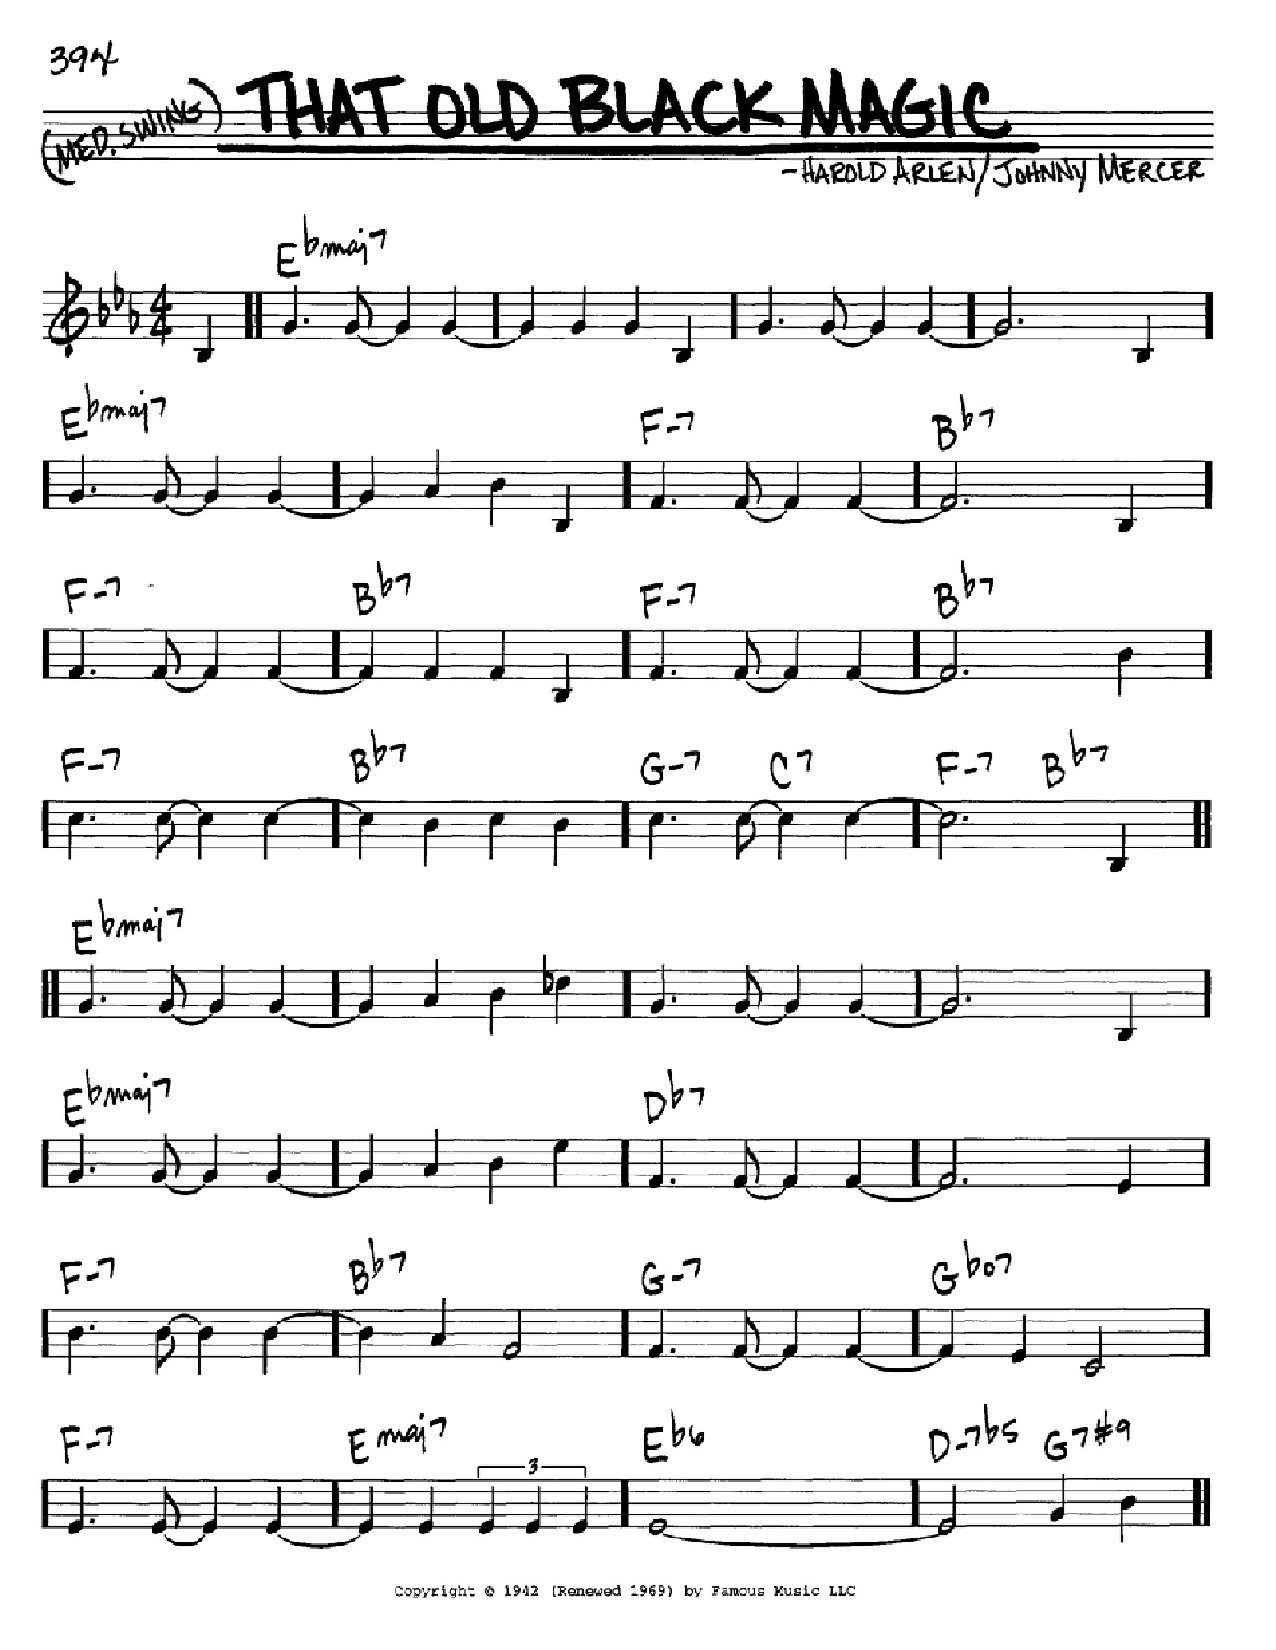 Harold Arlen That Old Black Magic Sheet Music Notes & Chords for Real Book - Melody, Lyrics & Chords - C Instruments - Download or Print PDF